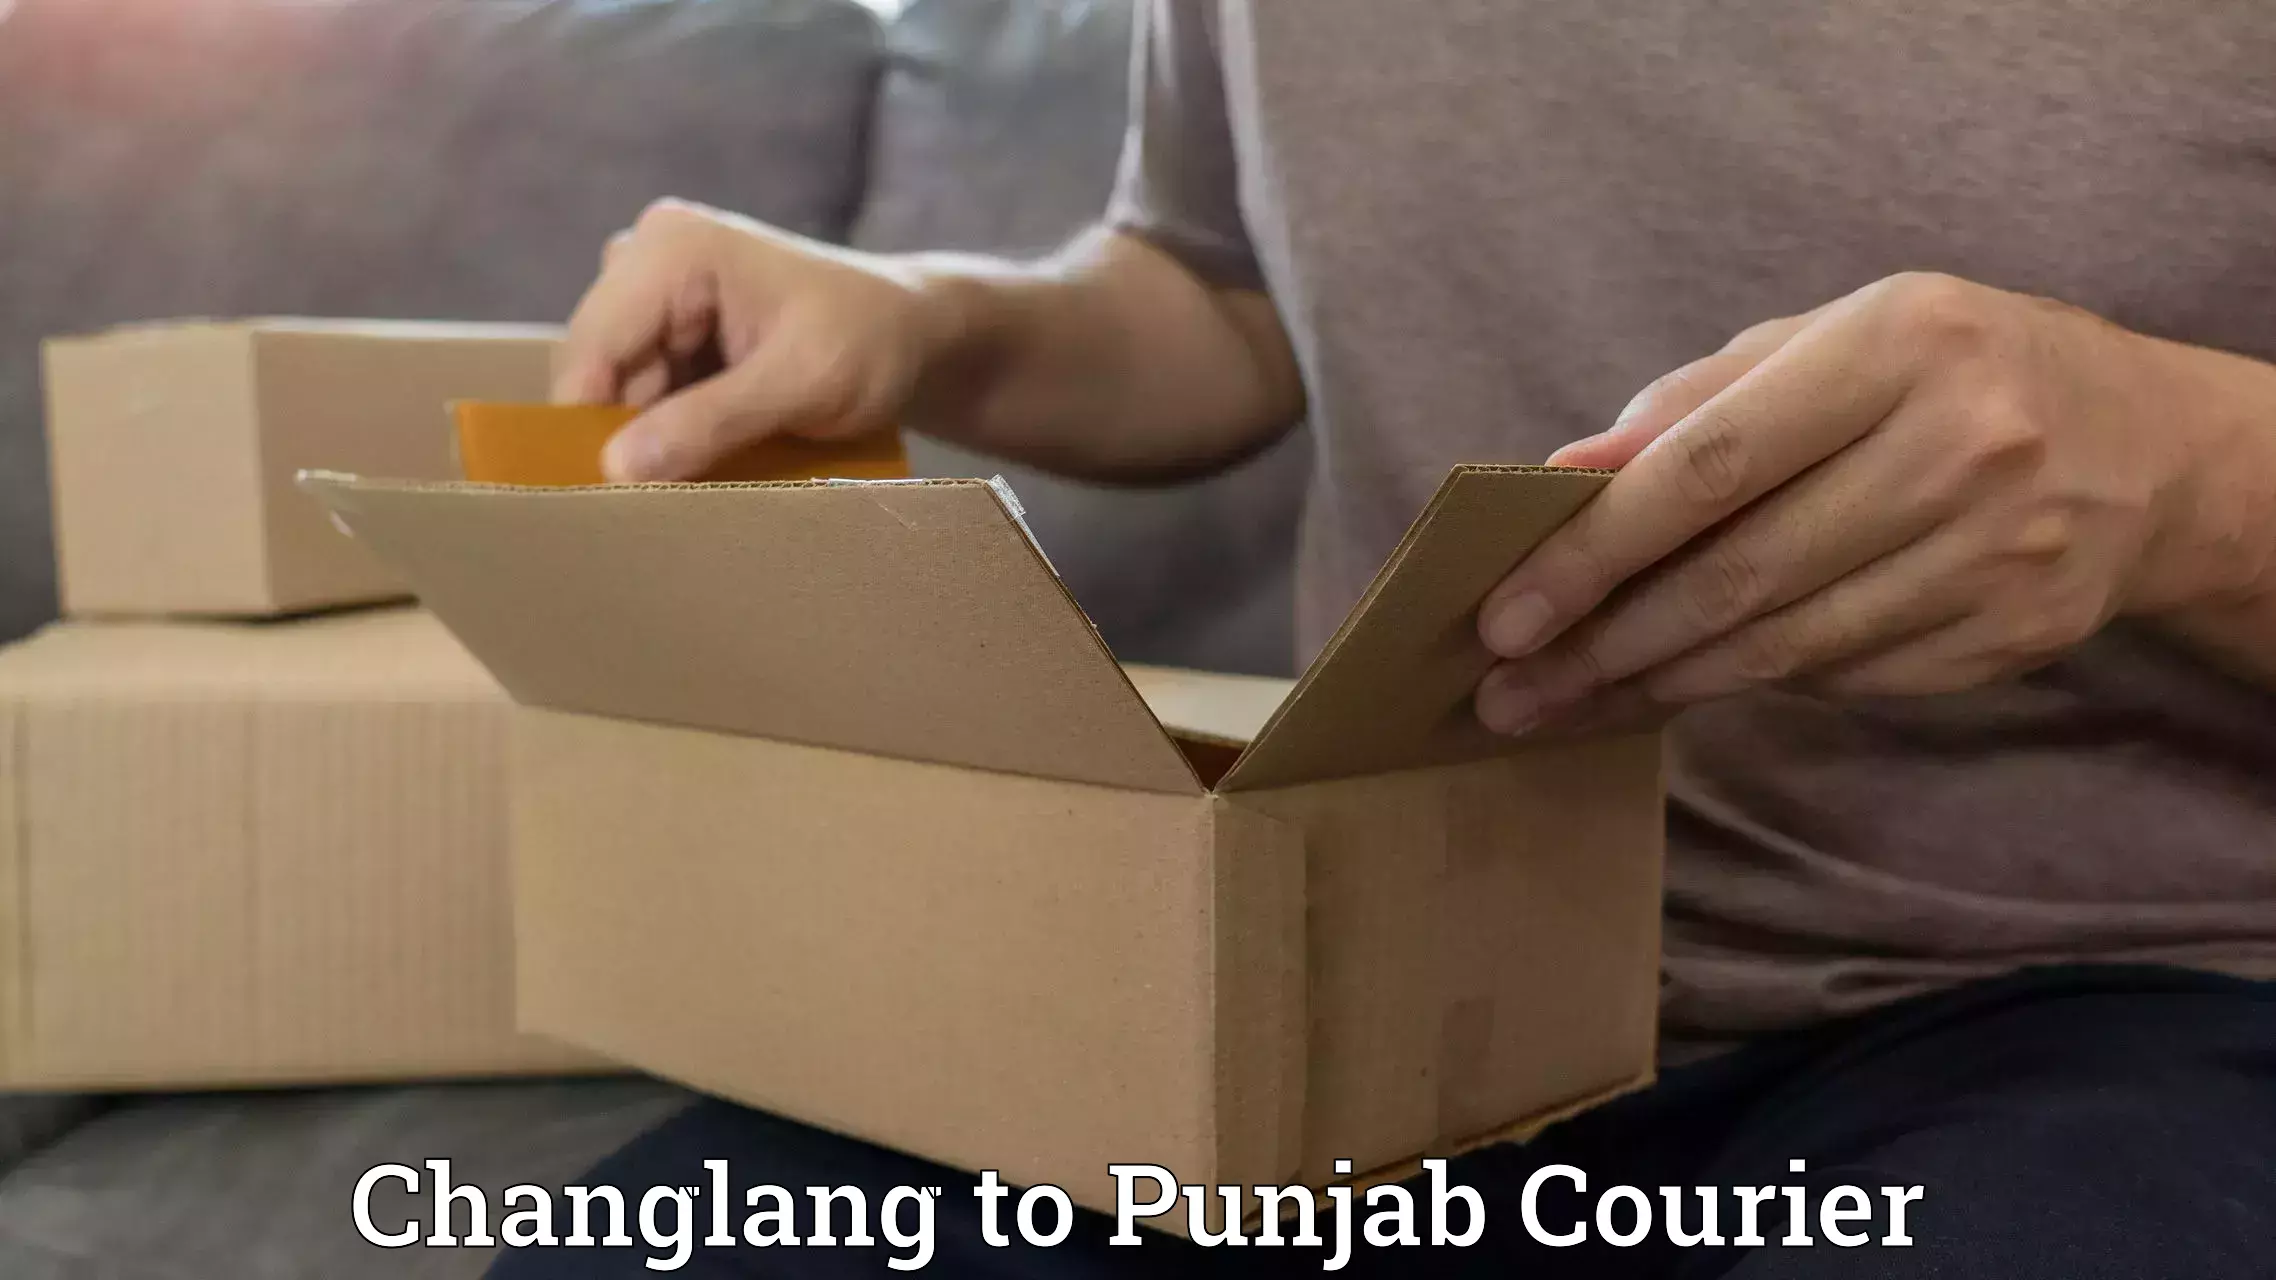 Advanced logistics management Changlang to Punjab